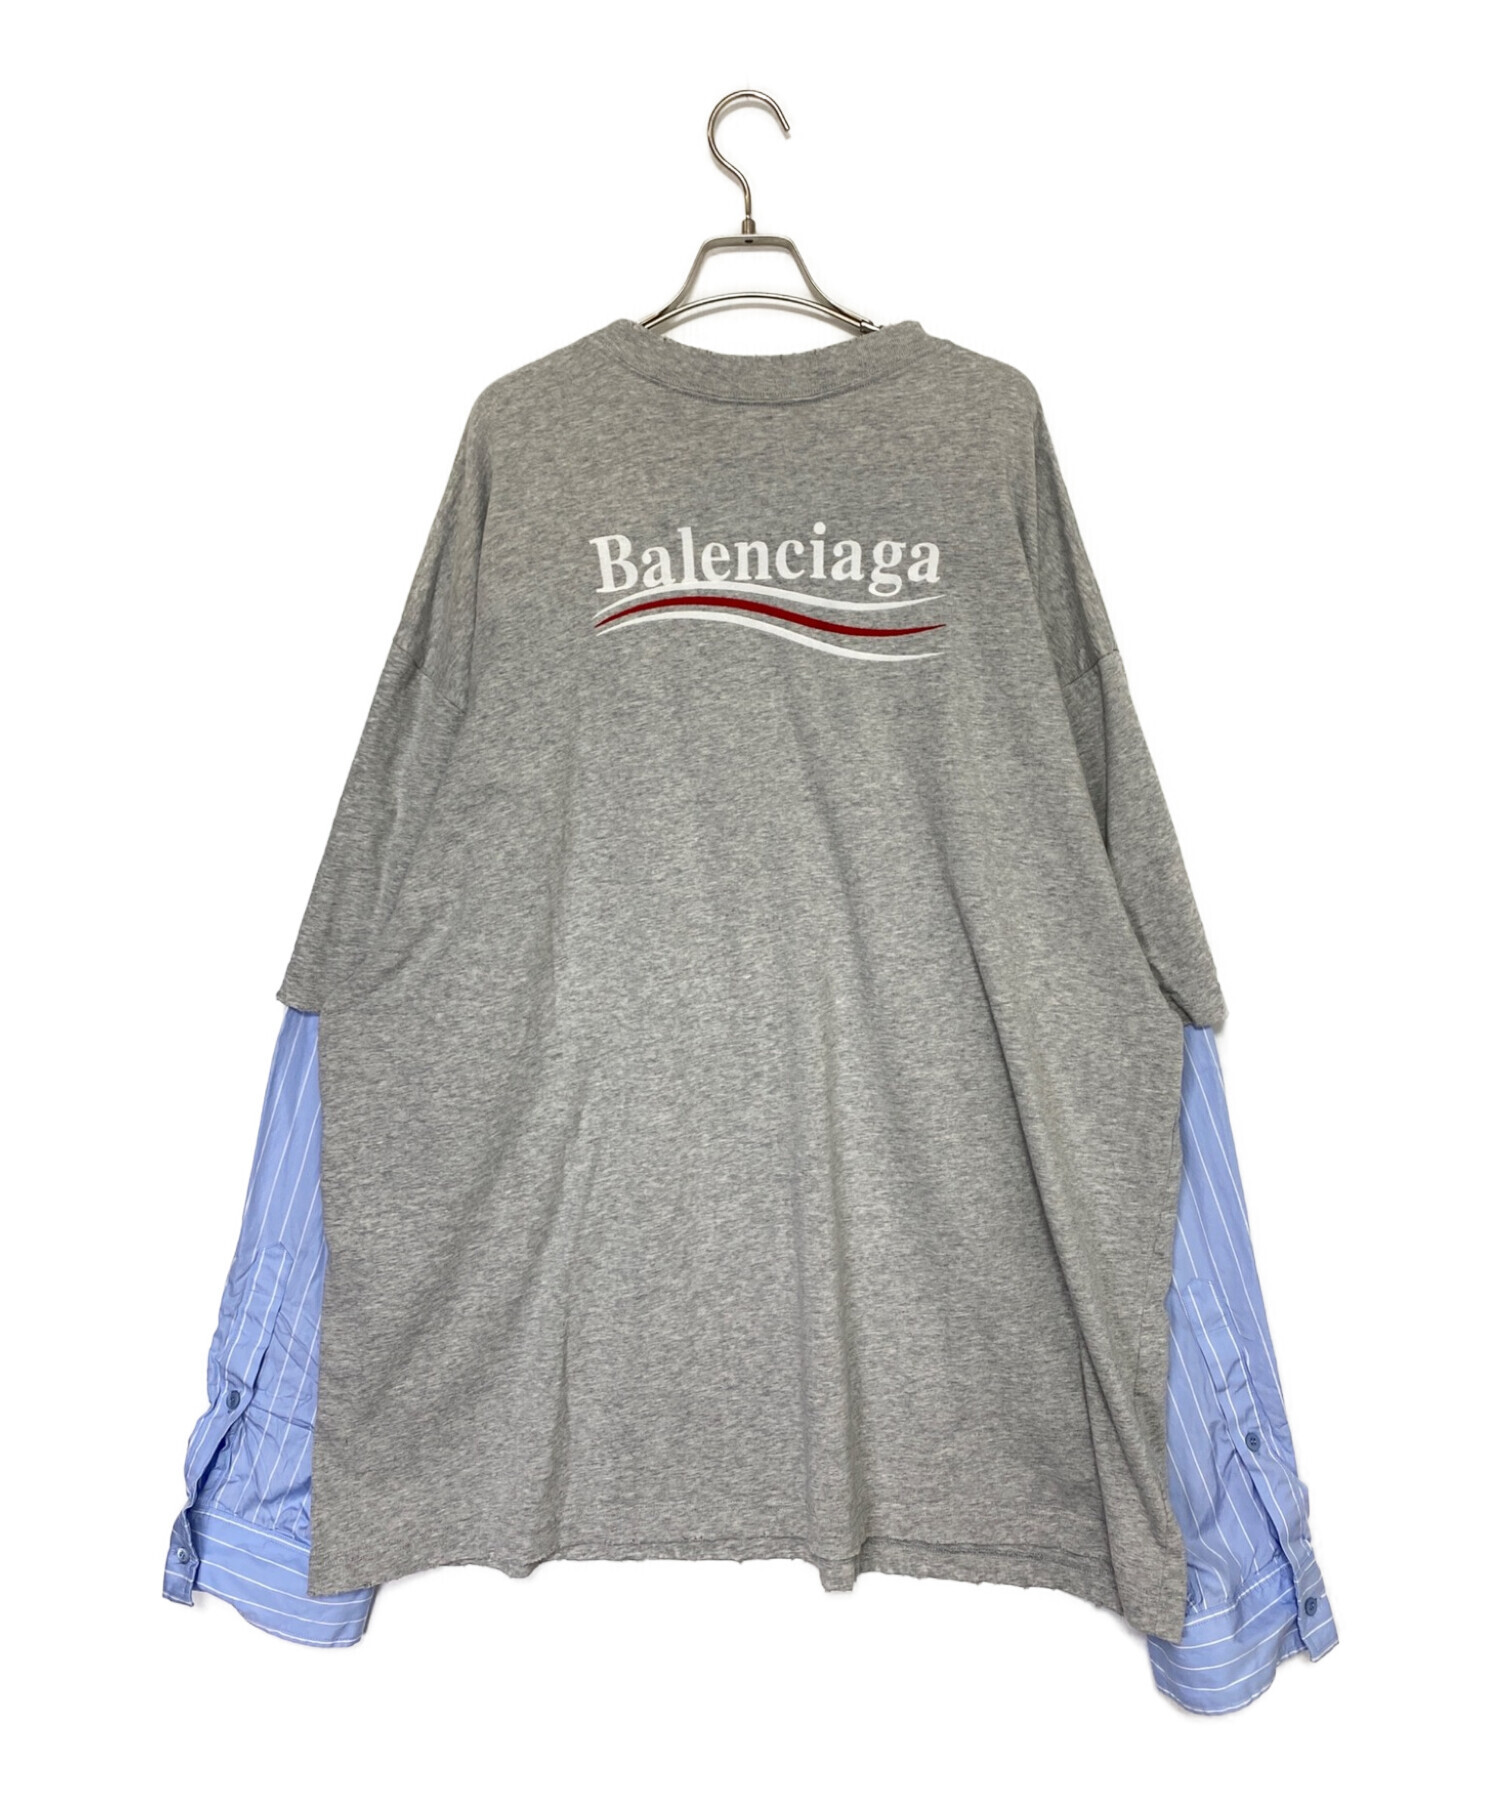 BALENCIAGA バレンシアガ Tシャツ グレー XL ヴィンテージ加工-